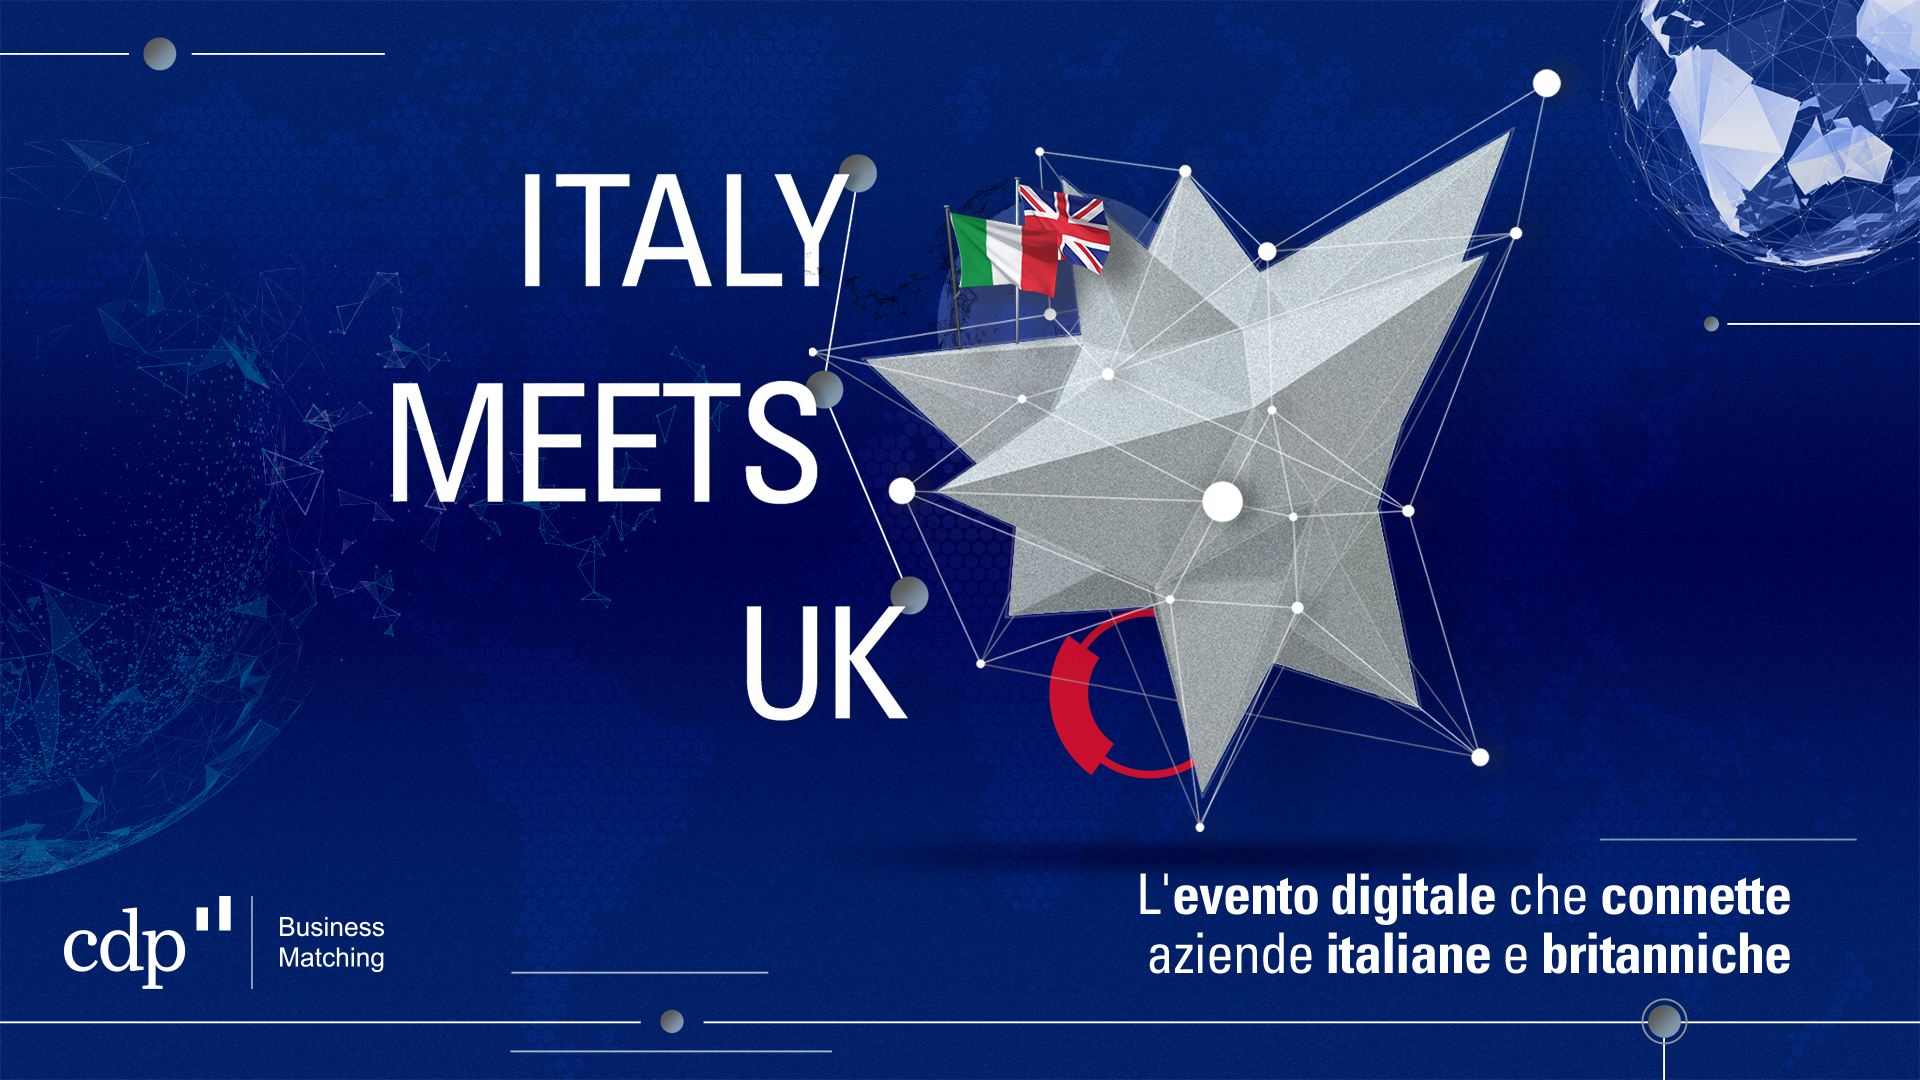 CDP Business Matching | Partecipa a “Italy meets UK” e scopri i prossimi appuntamenti digitali 